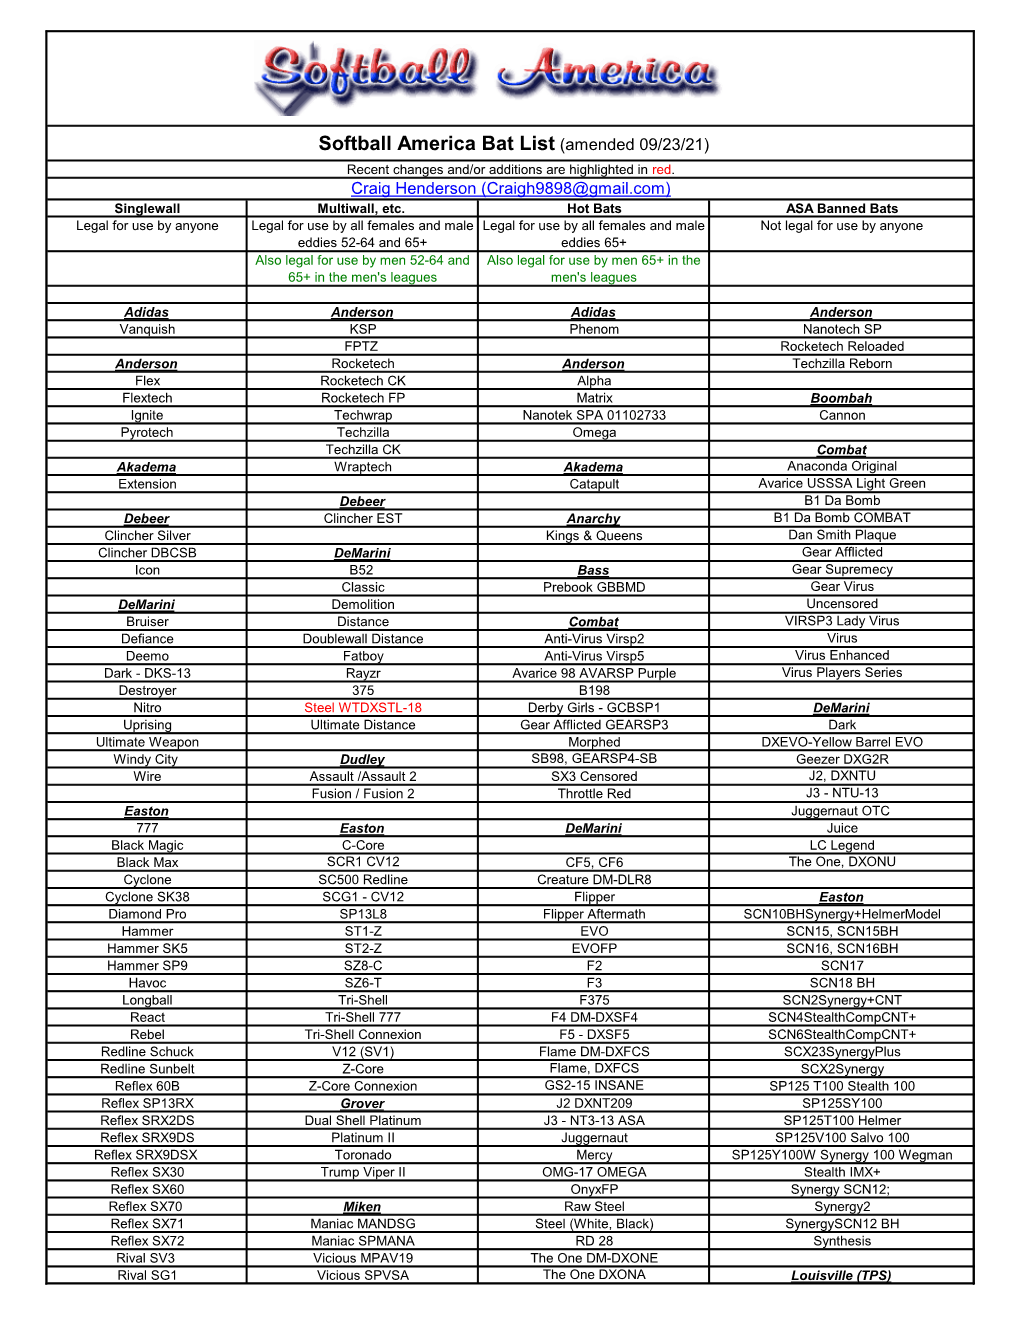 Softball America Bat List (Amended 06/29/21)